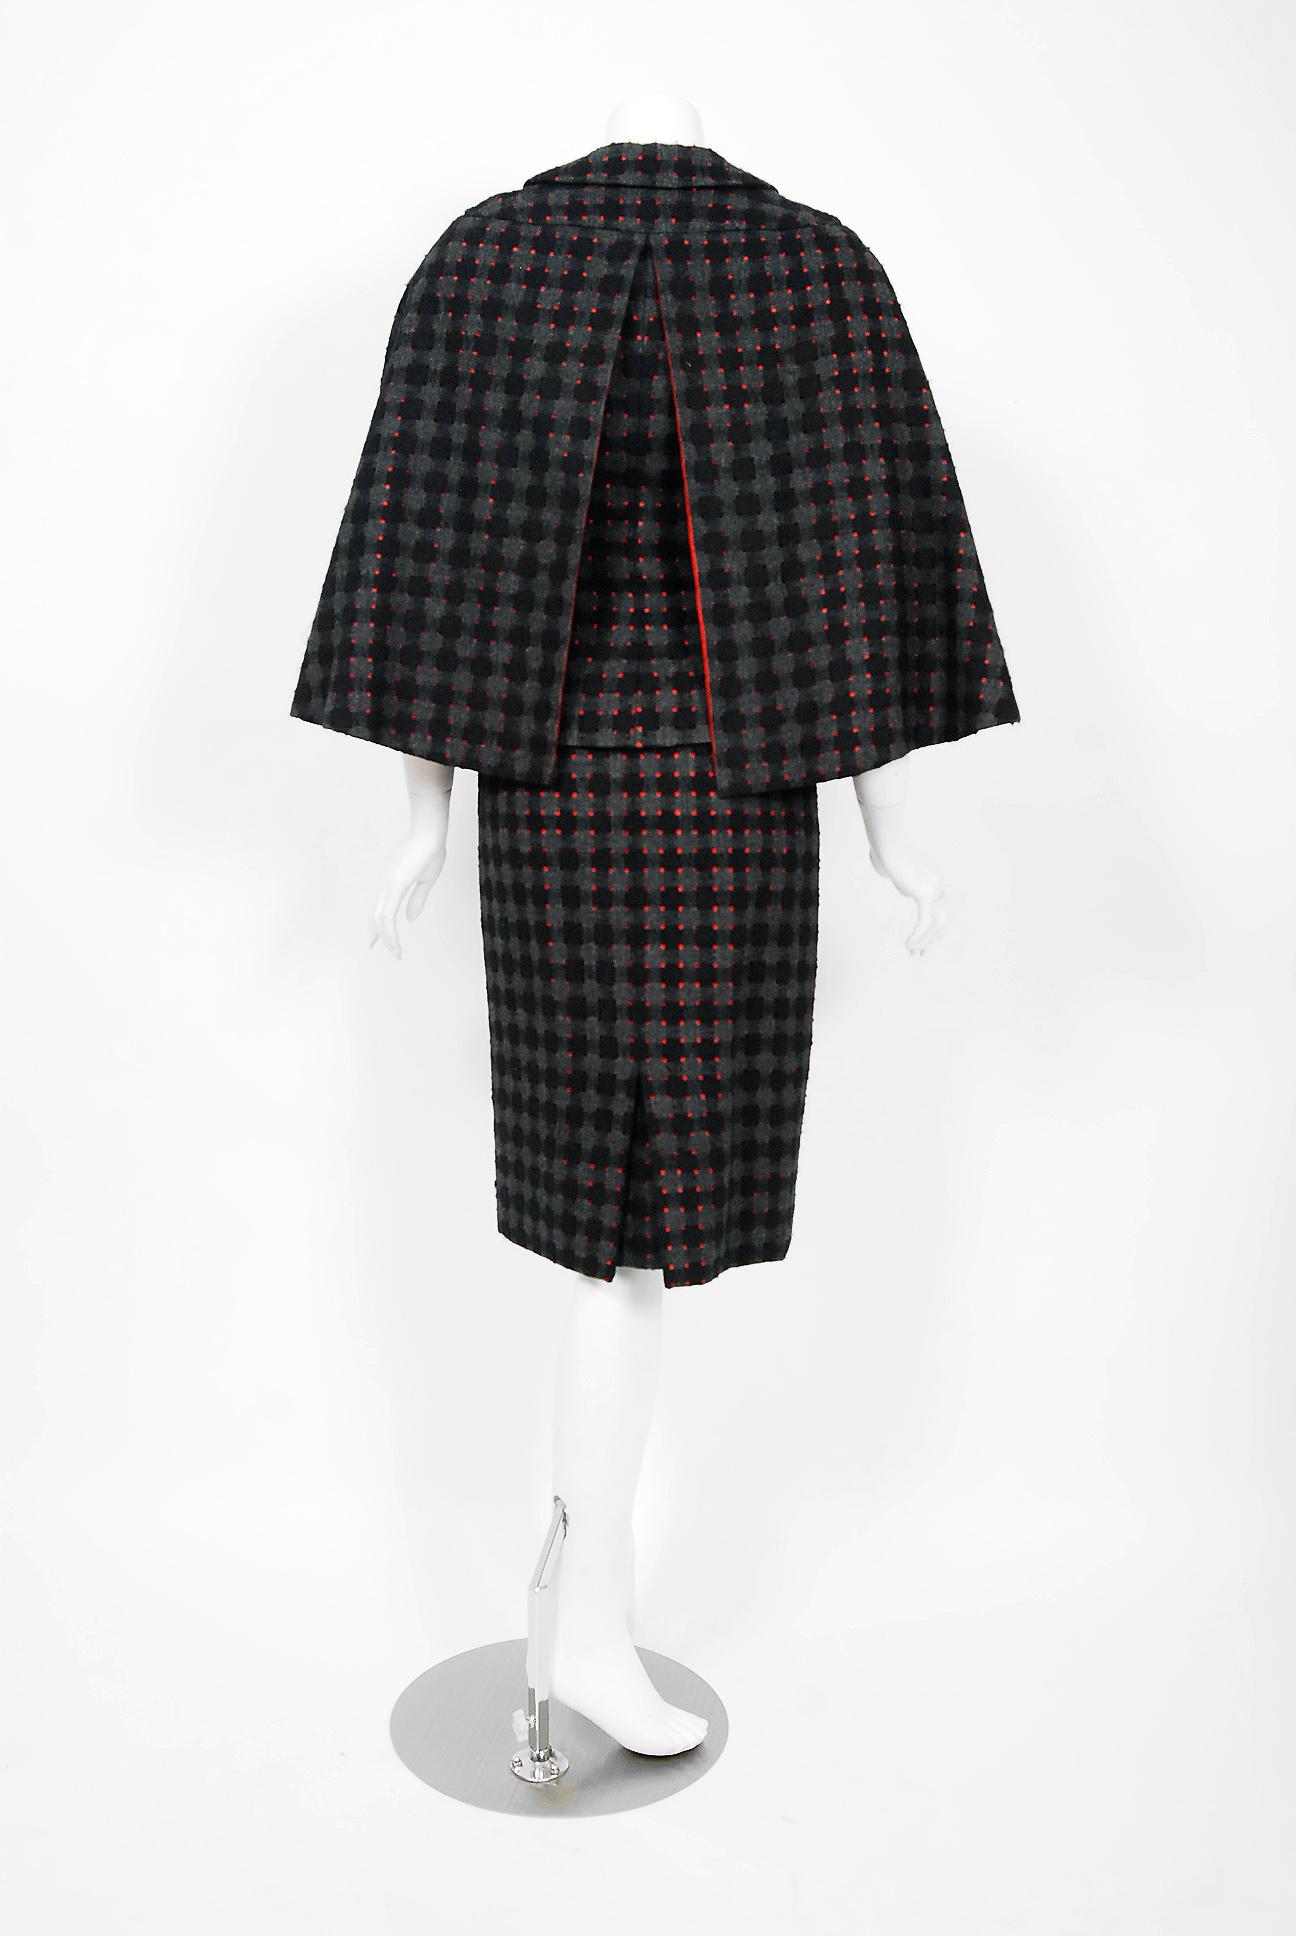 1940's Irene Lentz Couture Plaid Cut-Out Wool Winged Capelet Jacket & Skirt Suit 2